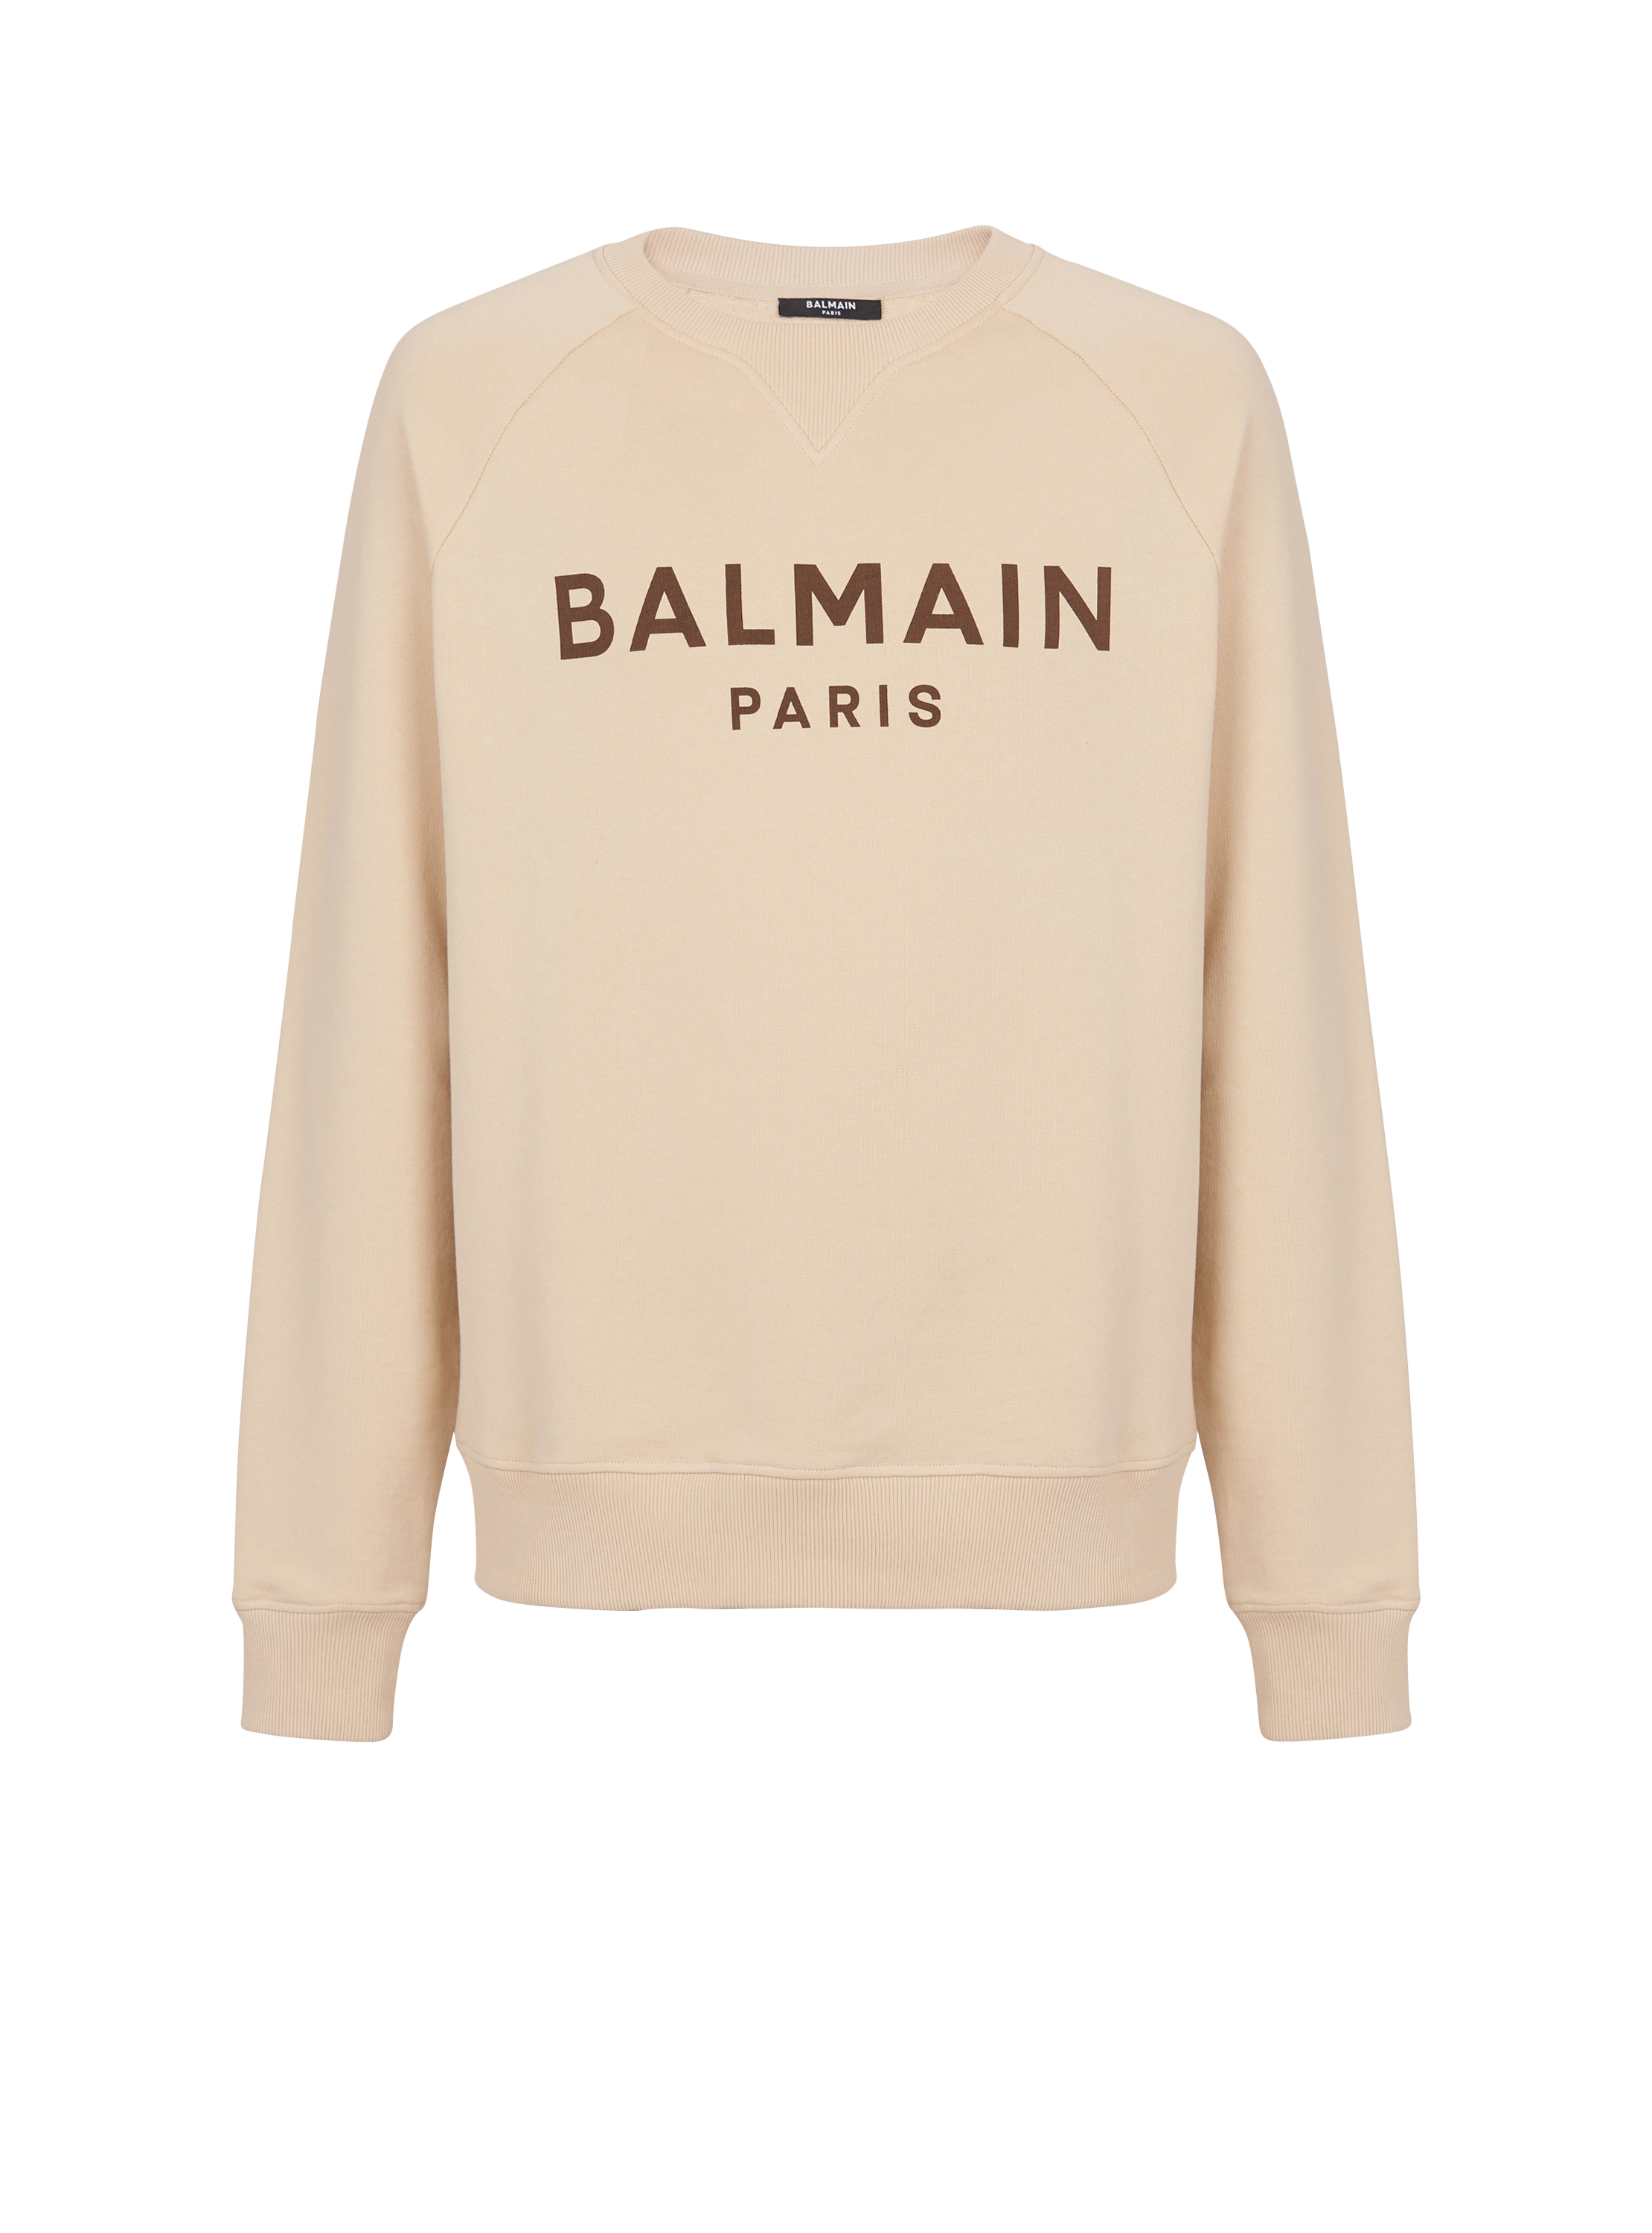 Balmain Parisプリント スウェットシャツ, ベージュ, hi-res